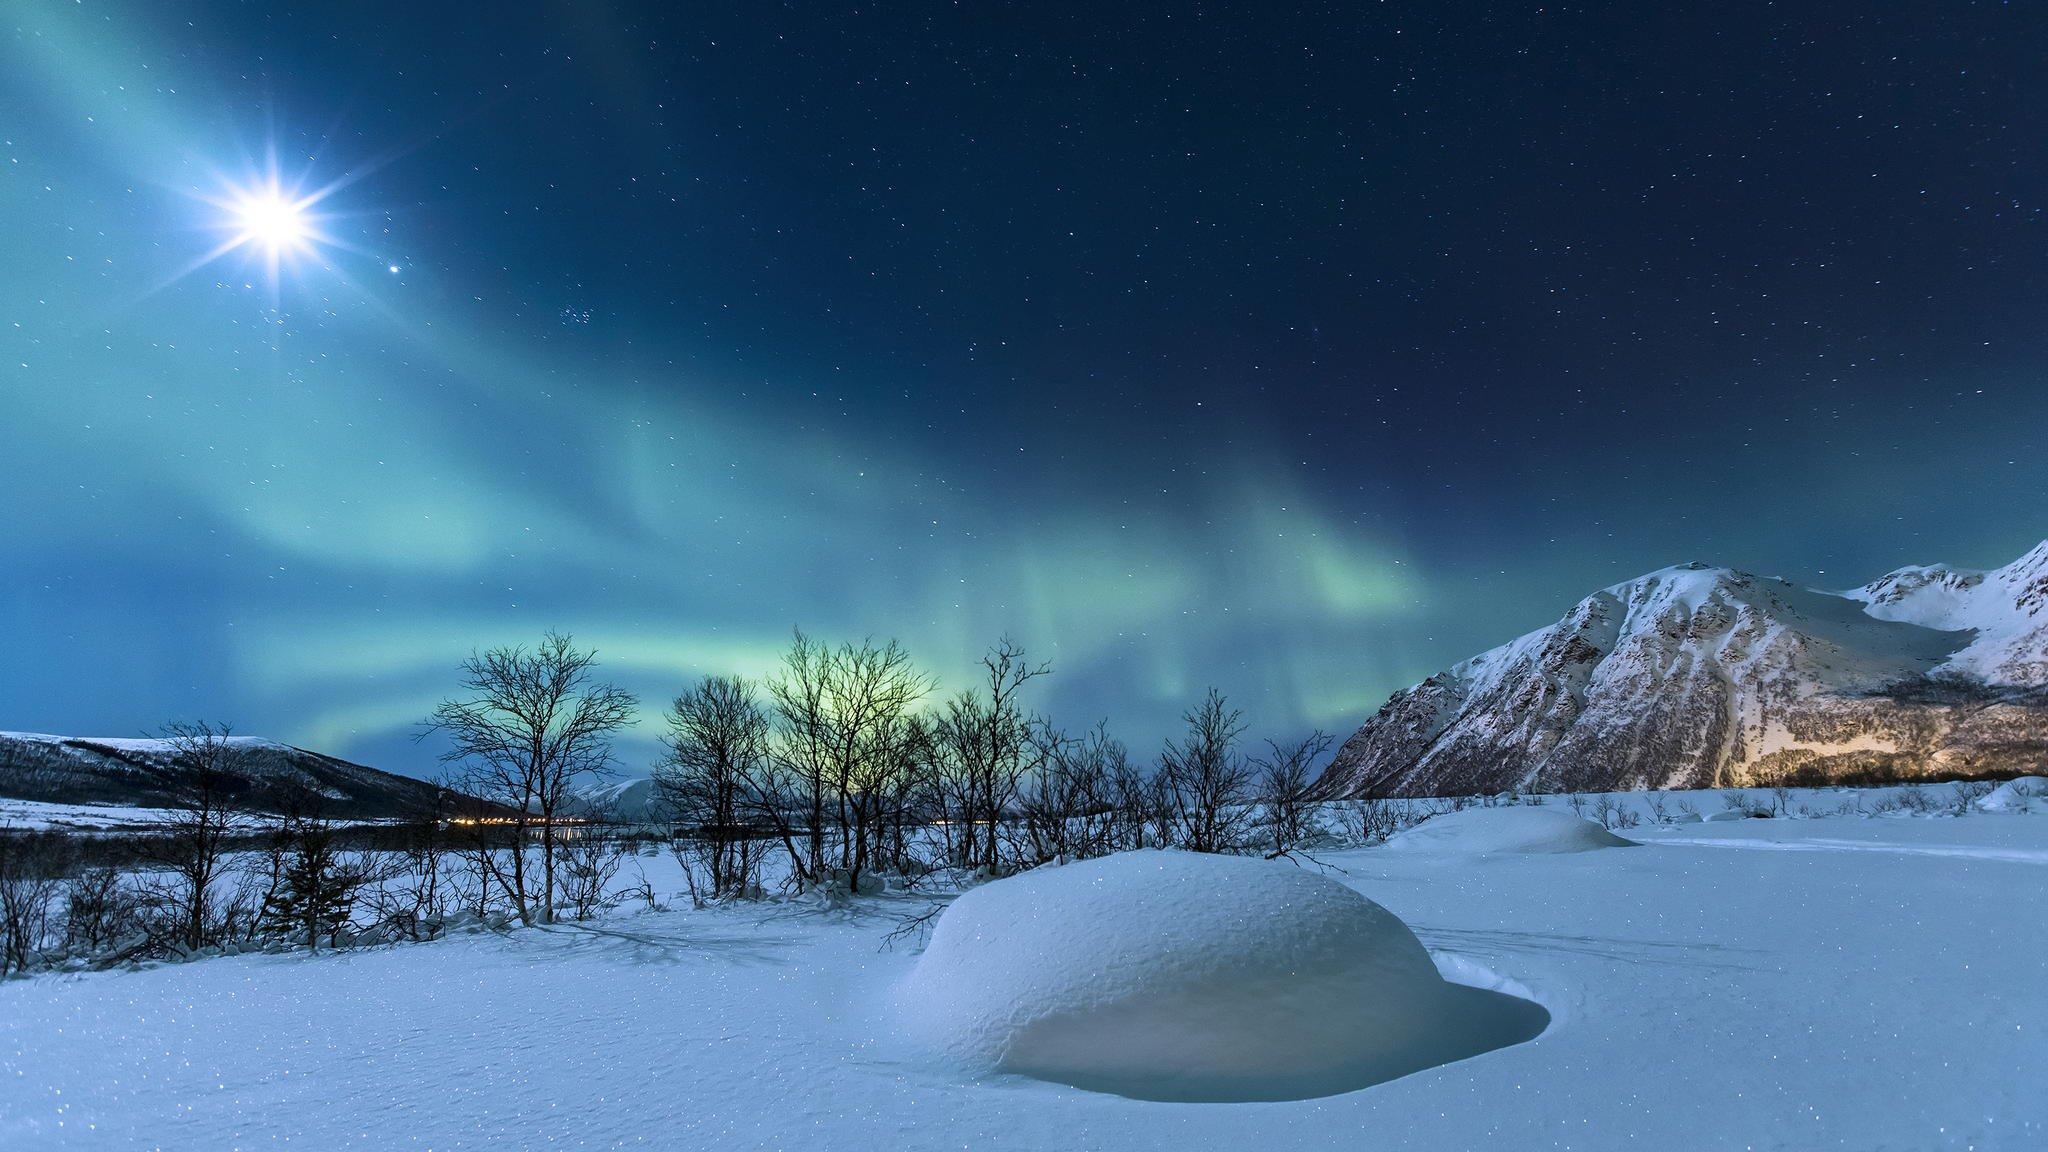 Norway Winter Night Hills At Night